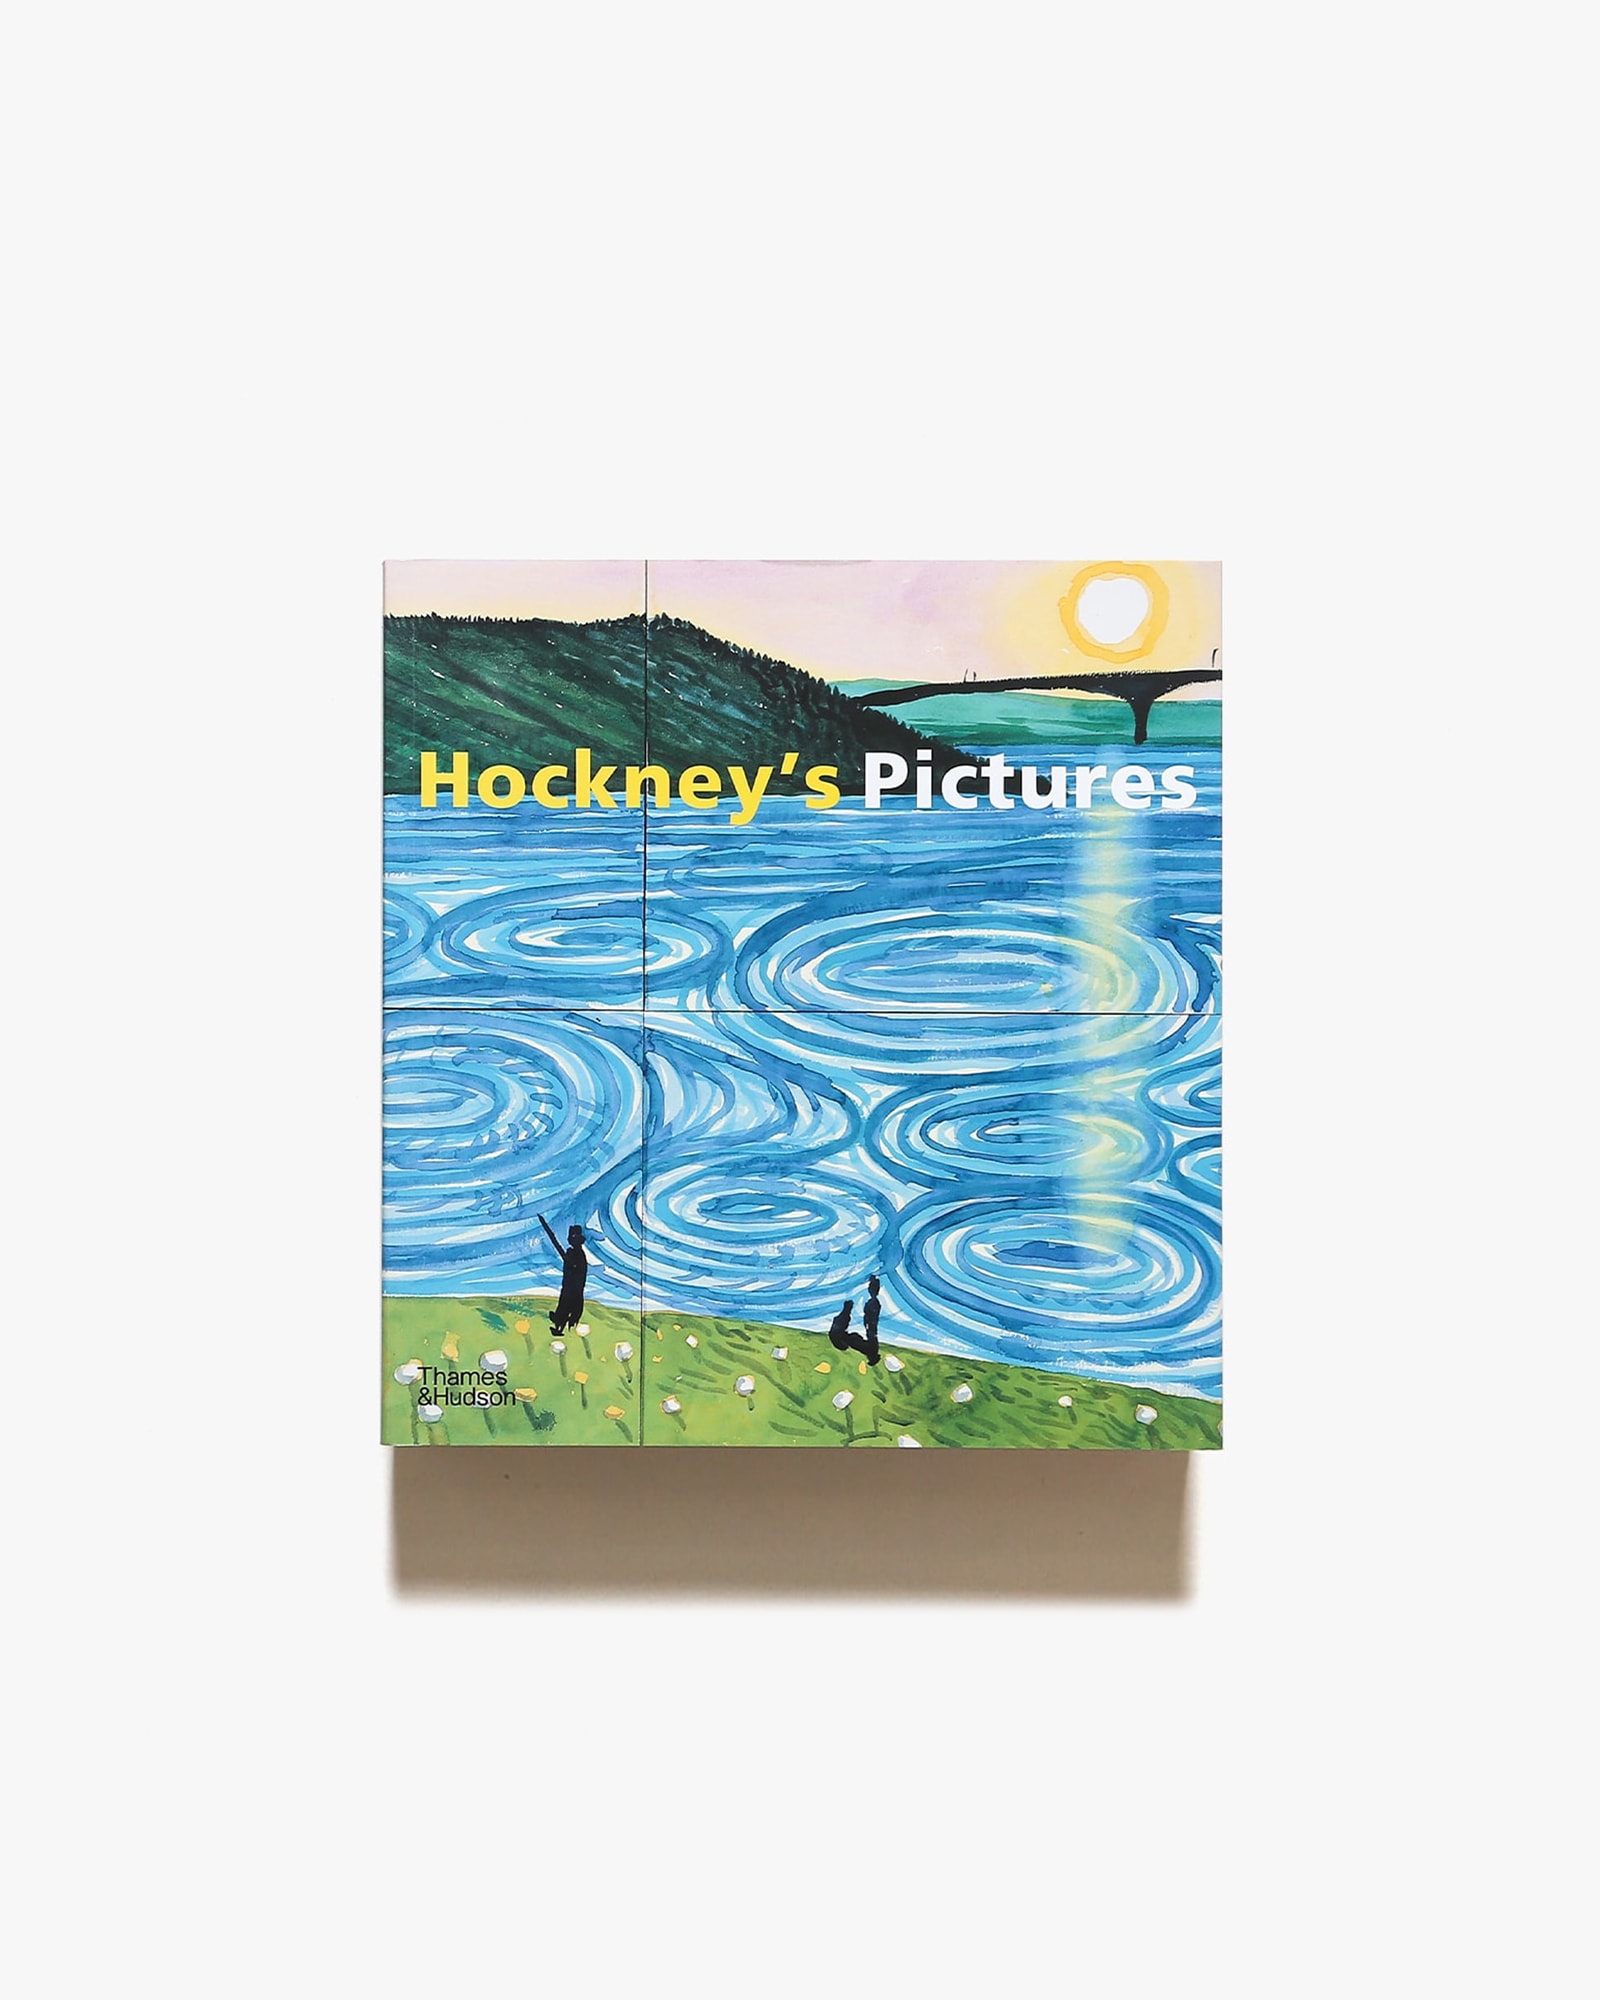 Hockney's Pictures | David Hockney デイヴィッド・ホックニー画集 ペーパーバック版 | nostos books  ノストスブックス